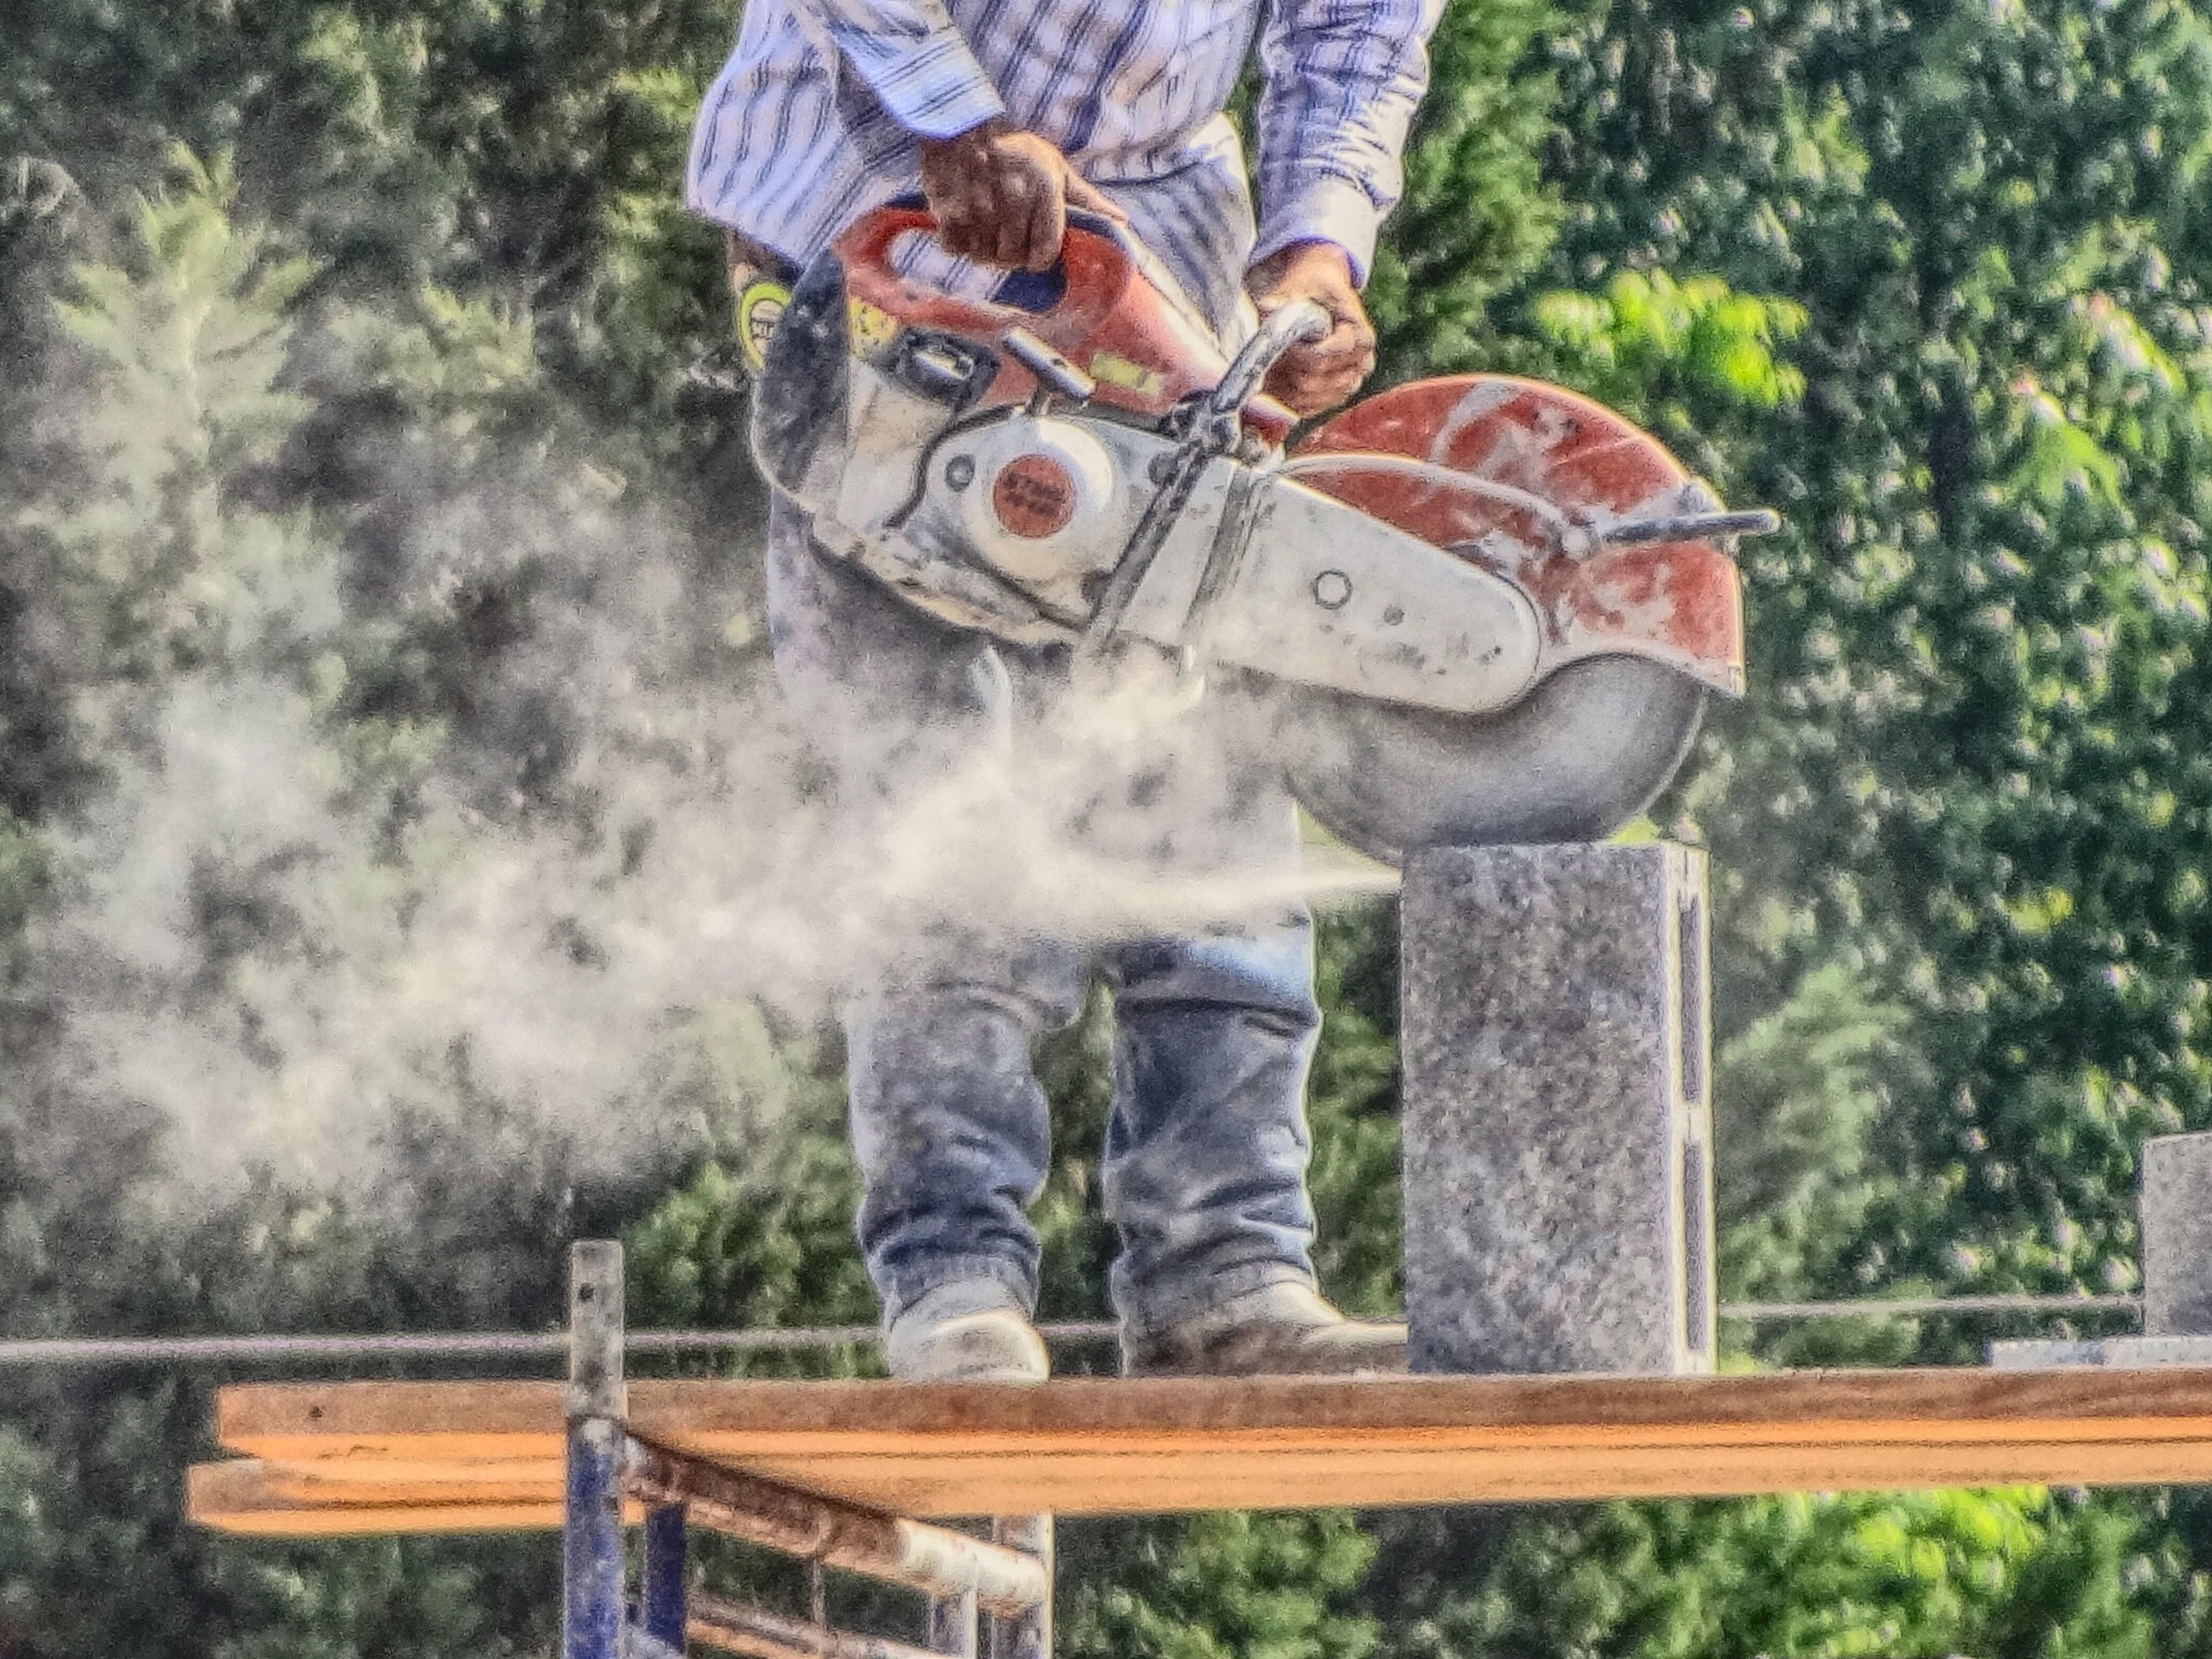 Construction Worker-Concrete Saw